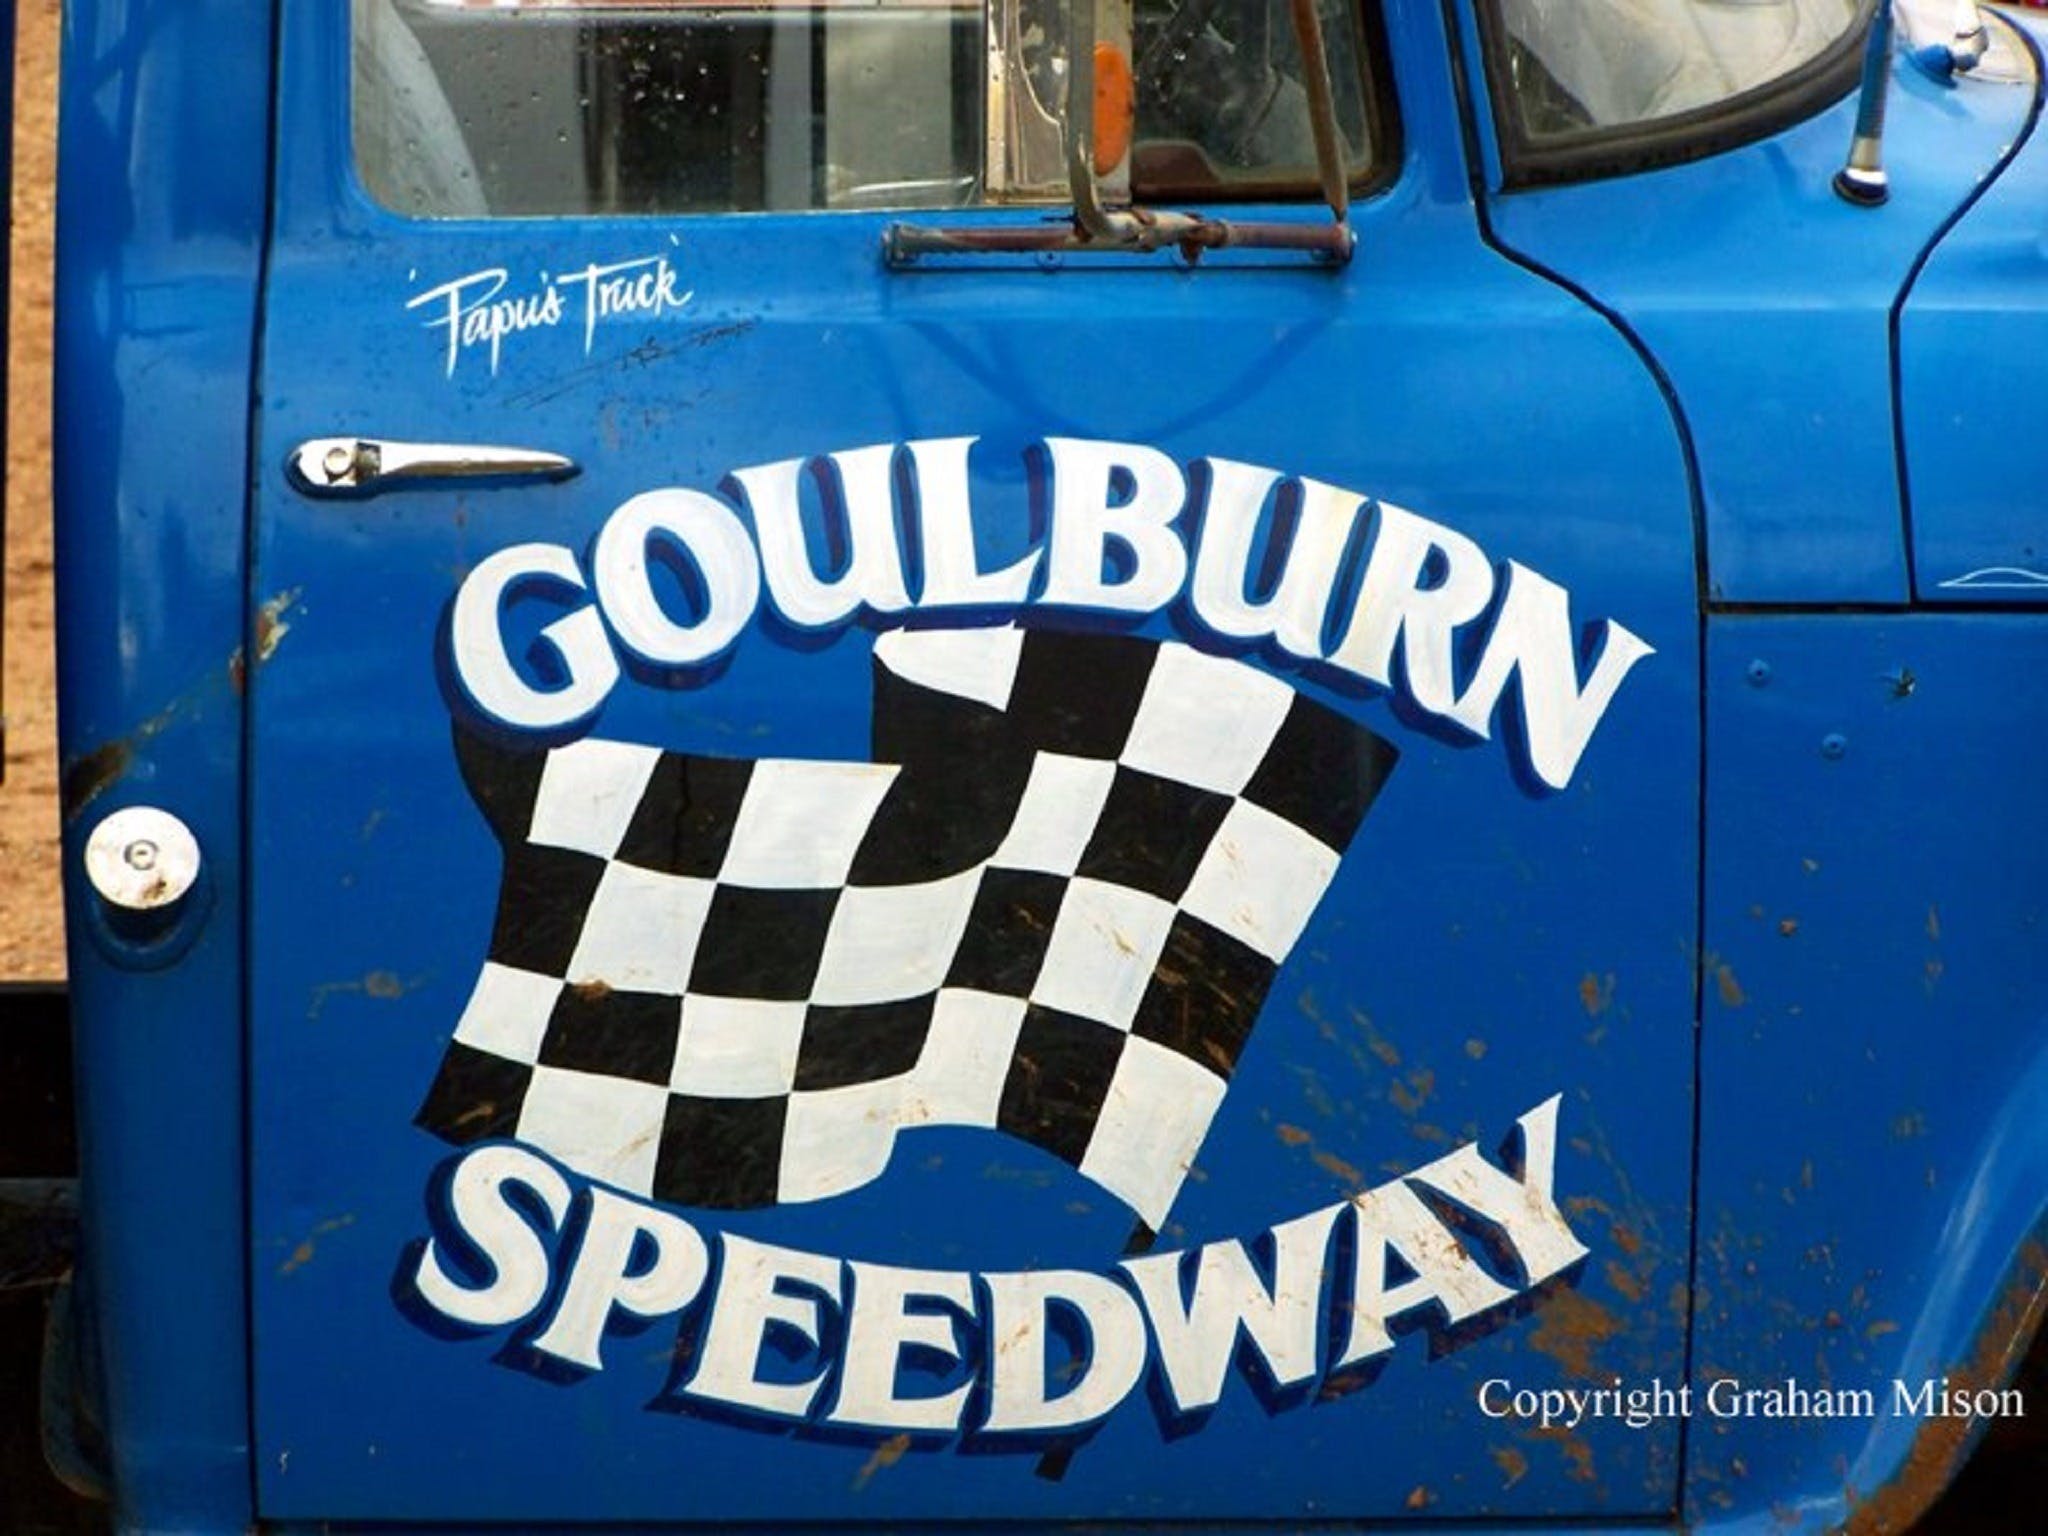 50 years of racing at Goulburn Speedway - Kingaroy Accommodation